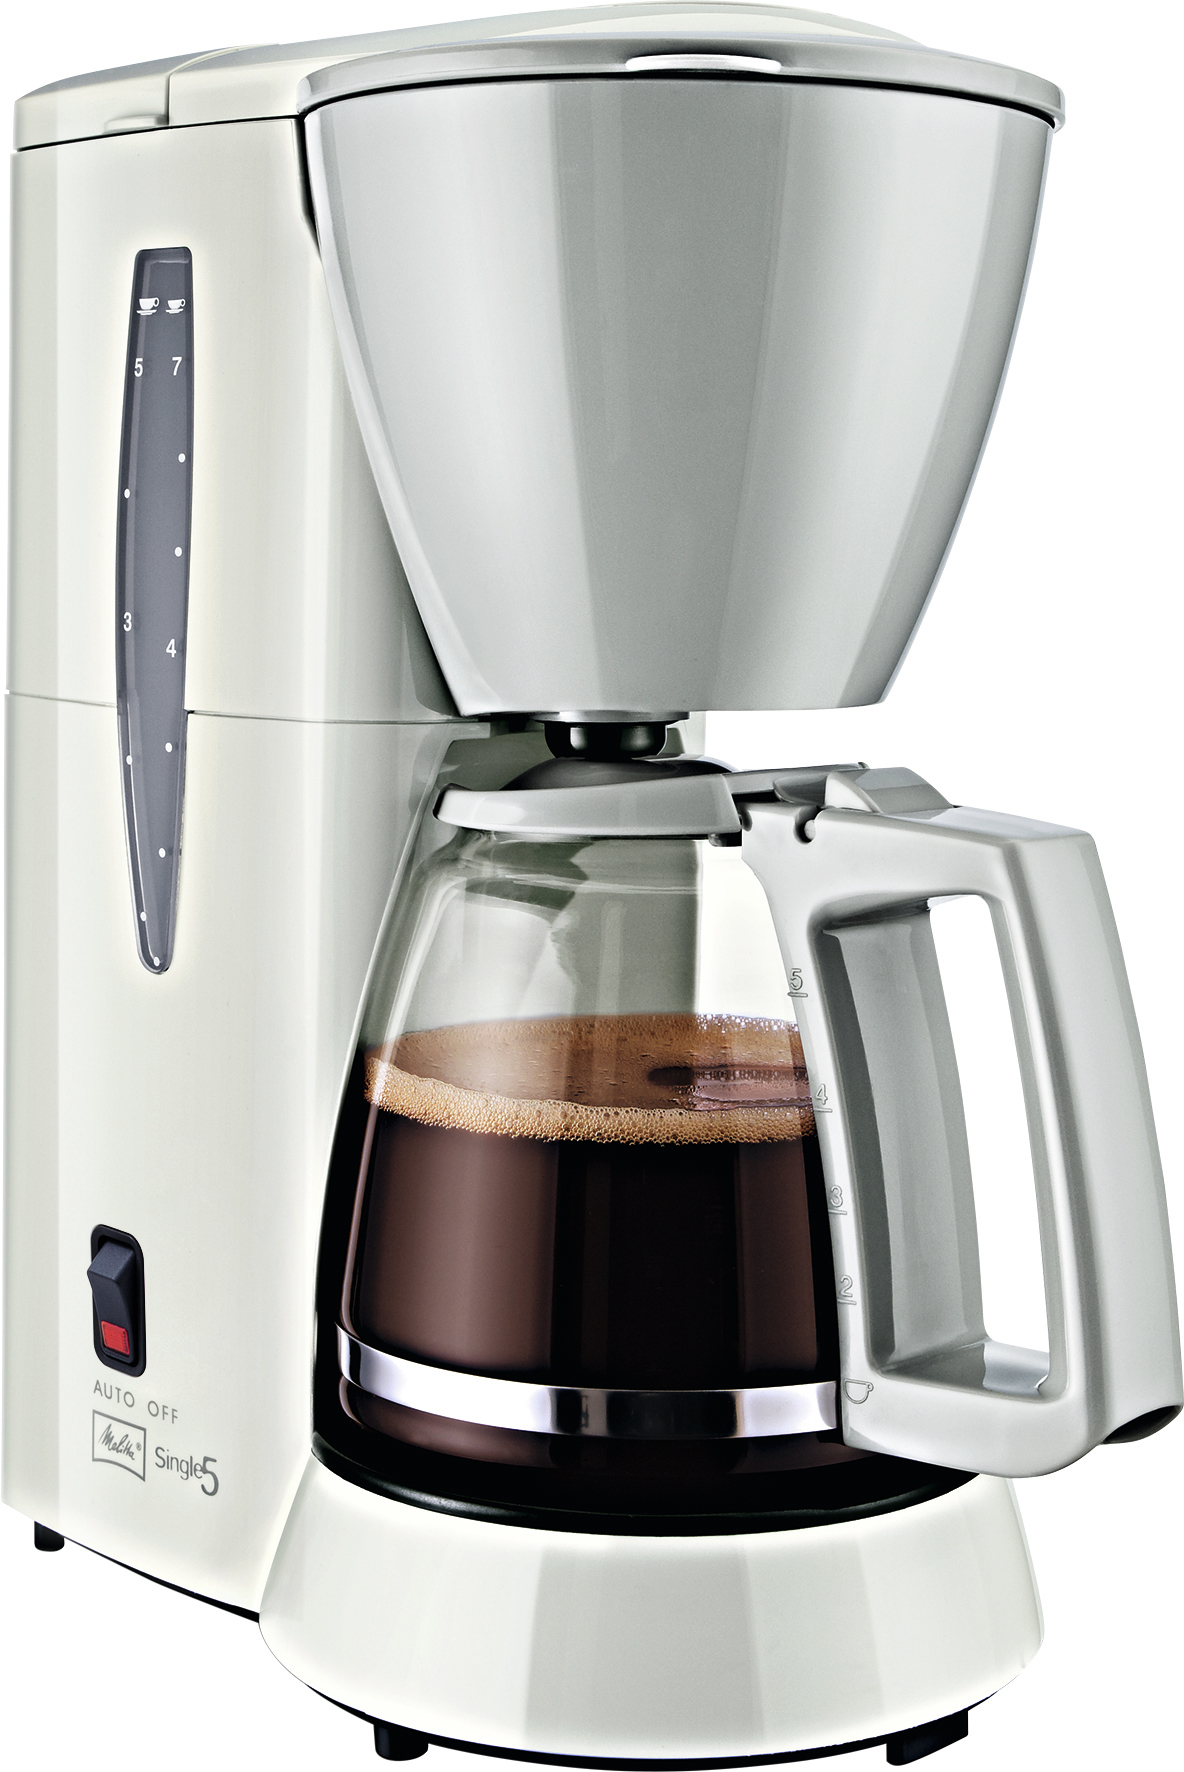 Melitta Kaffeeautomat Single 5 M 720-1/1 weiss-grau